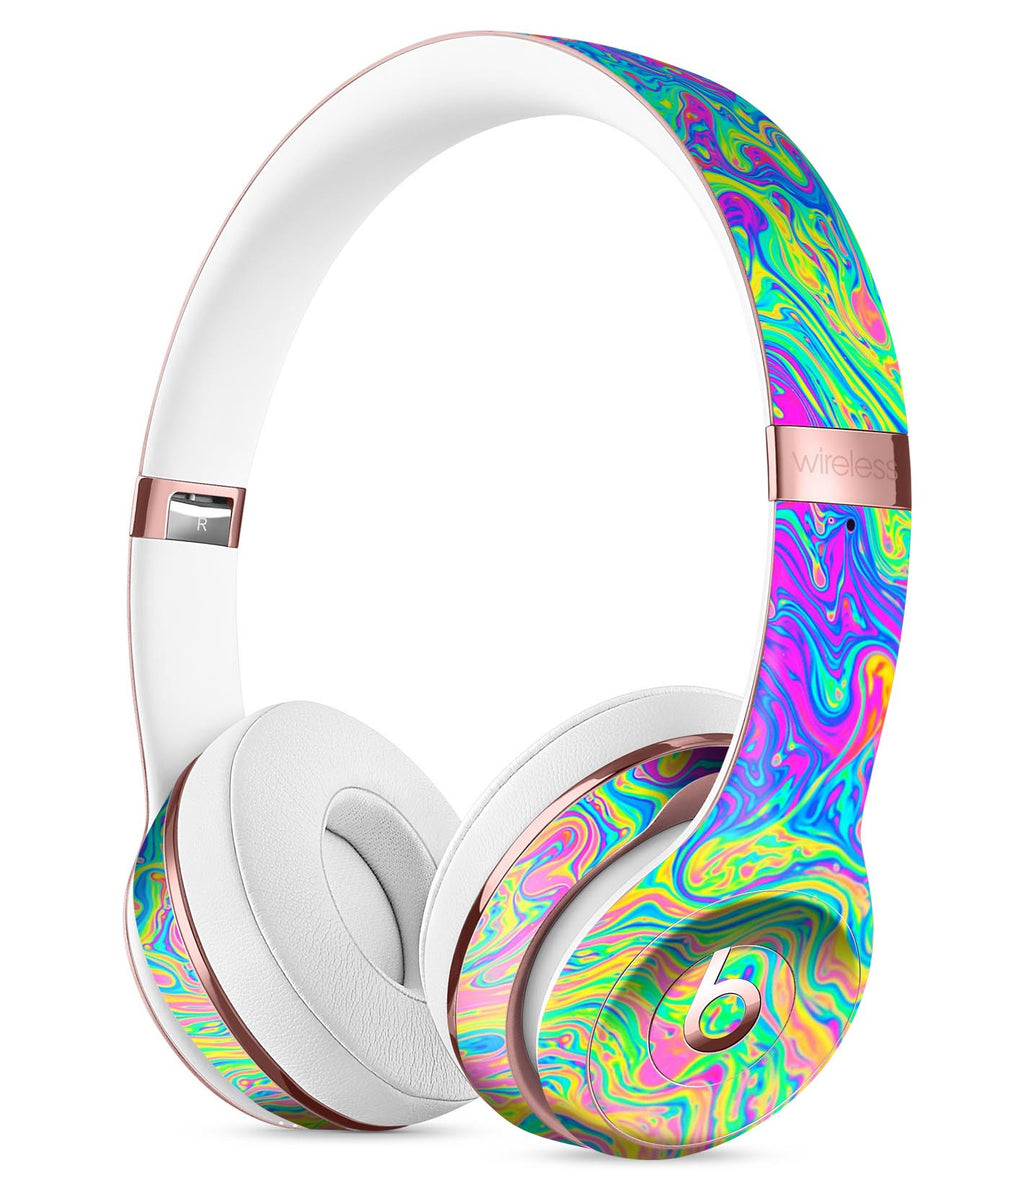 Купить недорогие качественные наушники. Beats Studio 3. Beats solo 3 цвета. Neon Color Swirls v2 Full-body Skin Kit for the Beats by Dre solo 3 Wireless Headphones. Битс студио наушники детские.